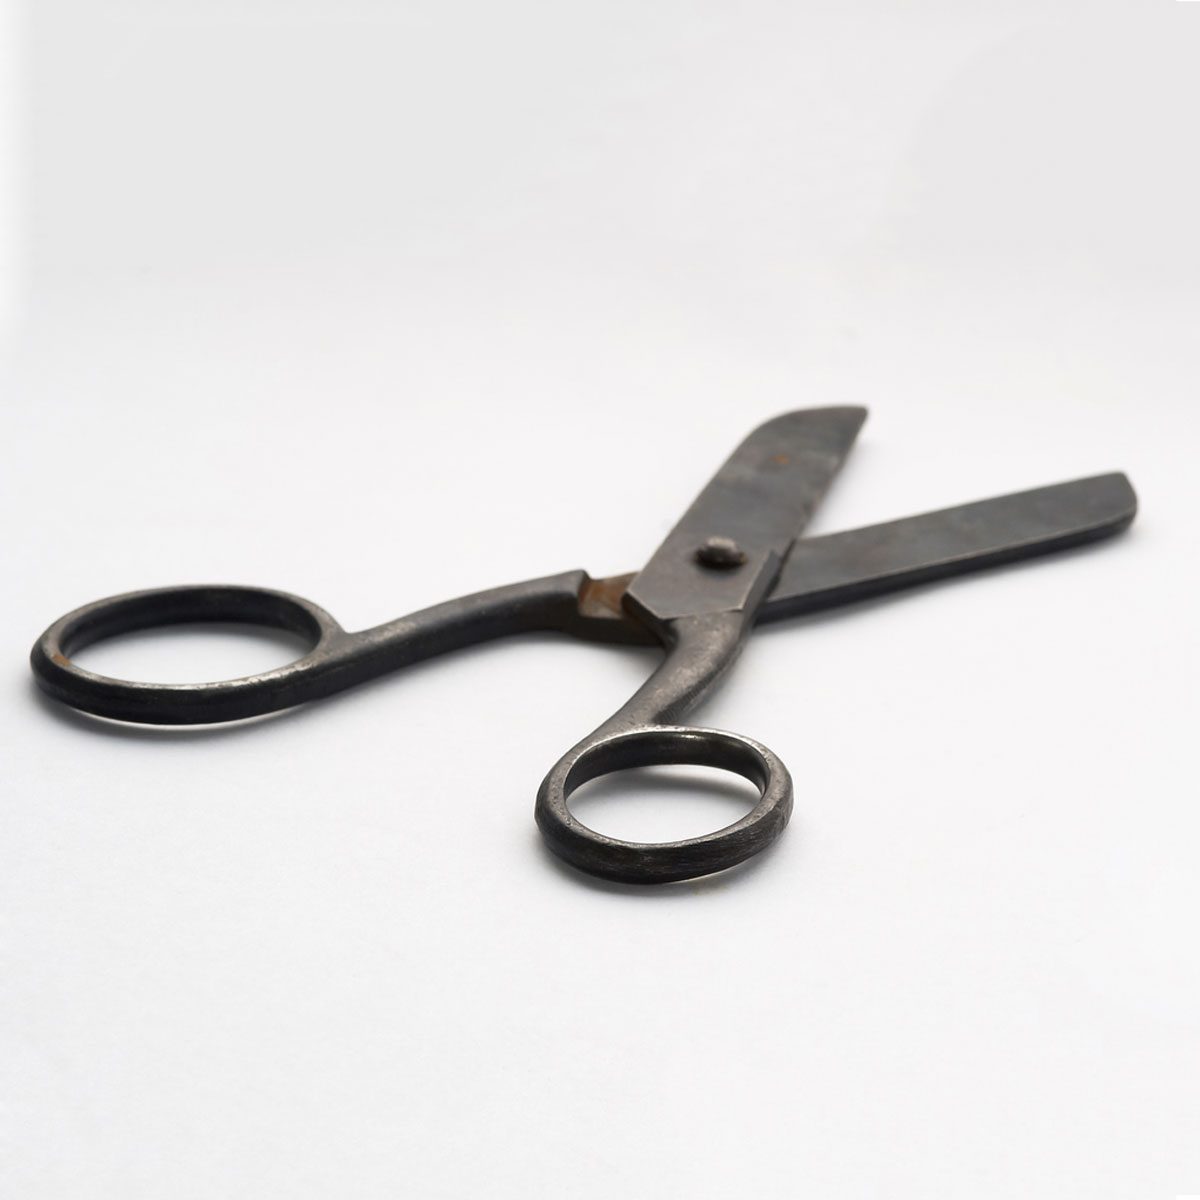 Old rusty scissors